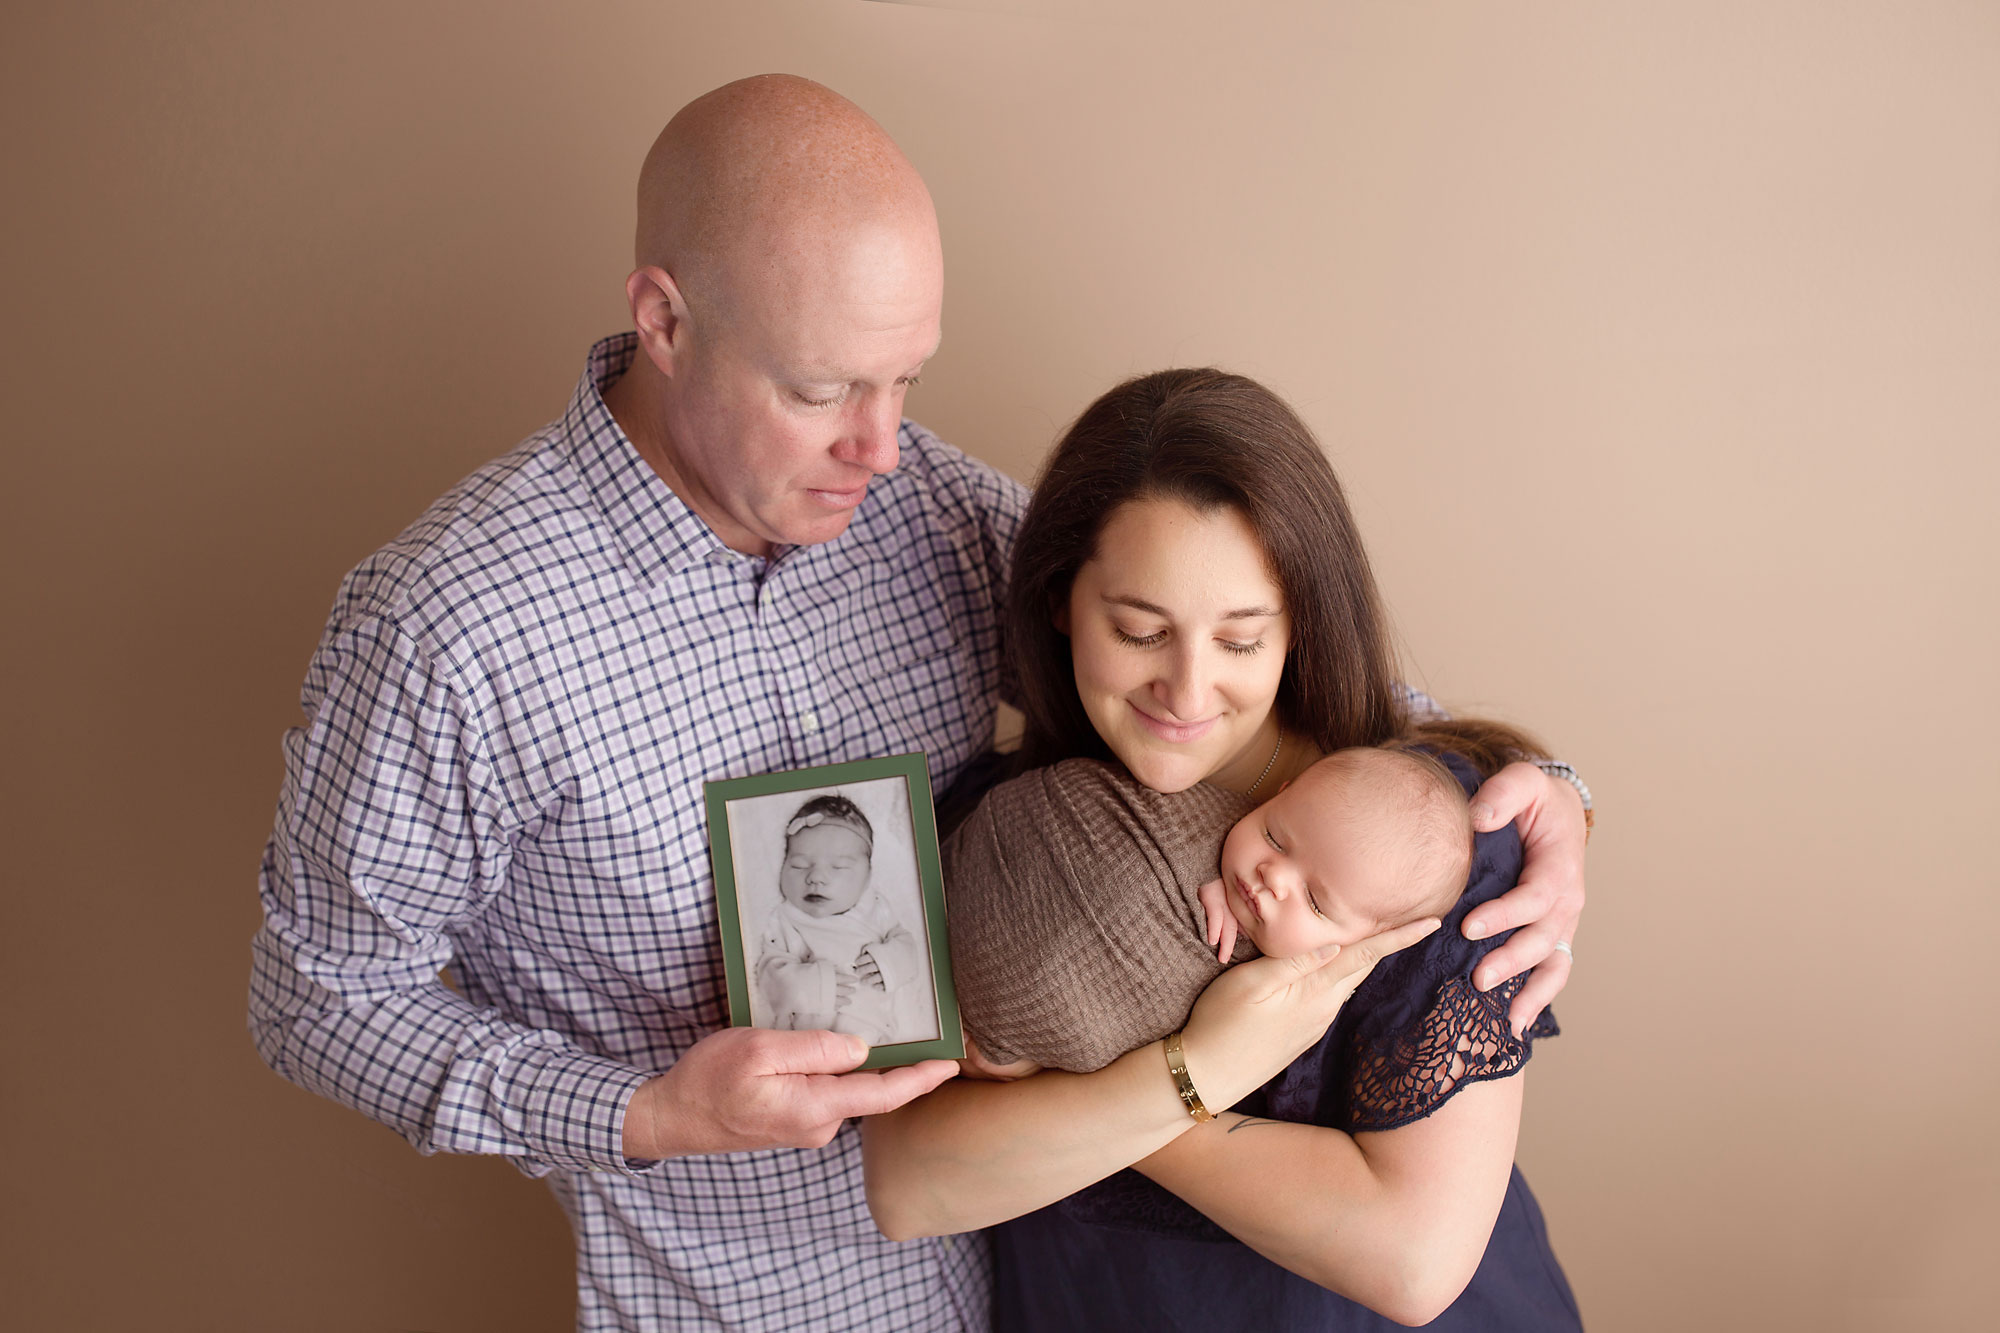 newborn photos with parents ideas 